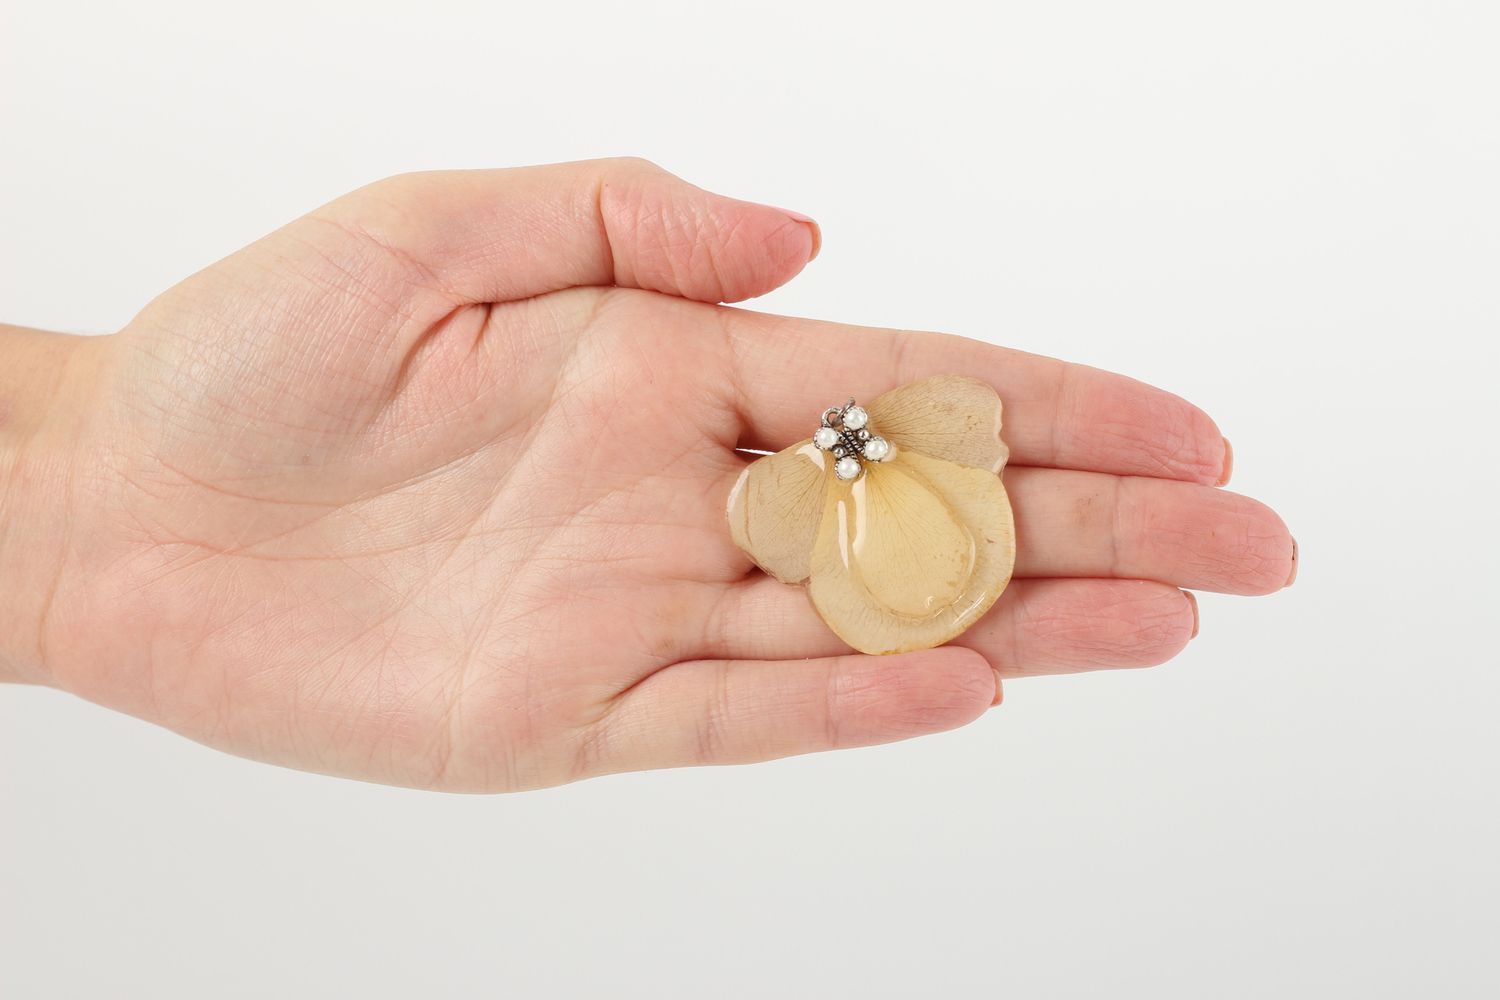 Handmade pendant unusual pendant for women gift ideas designer accessory photo 5